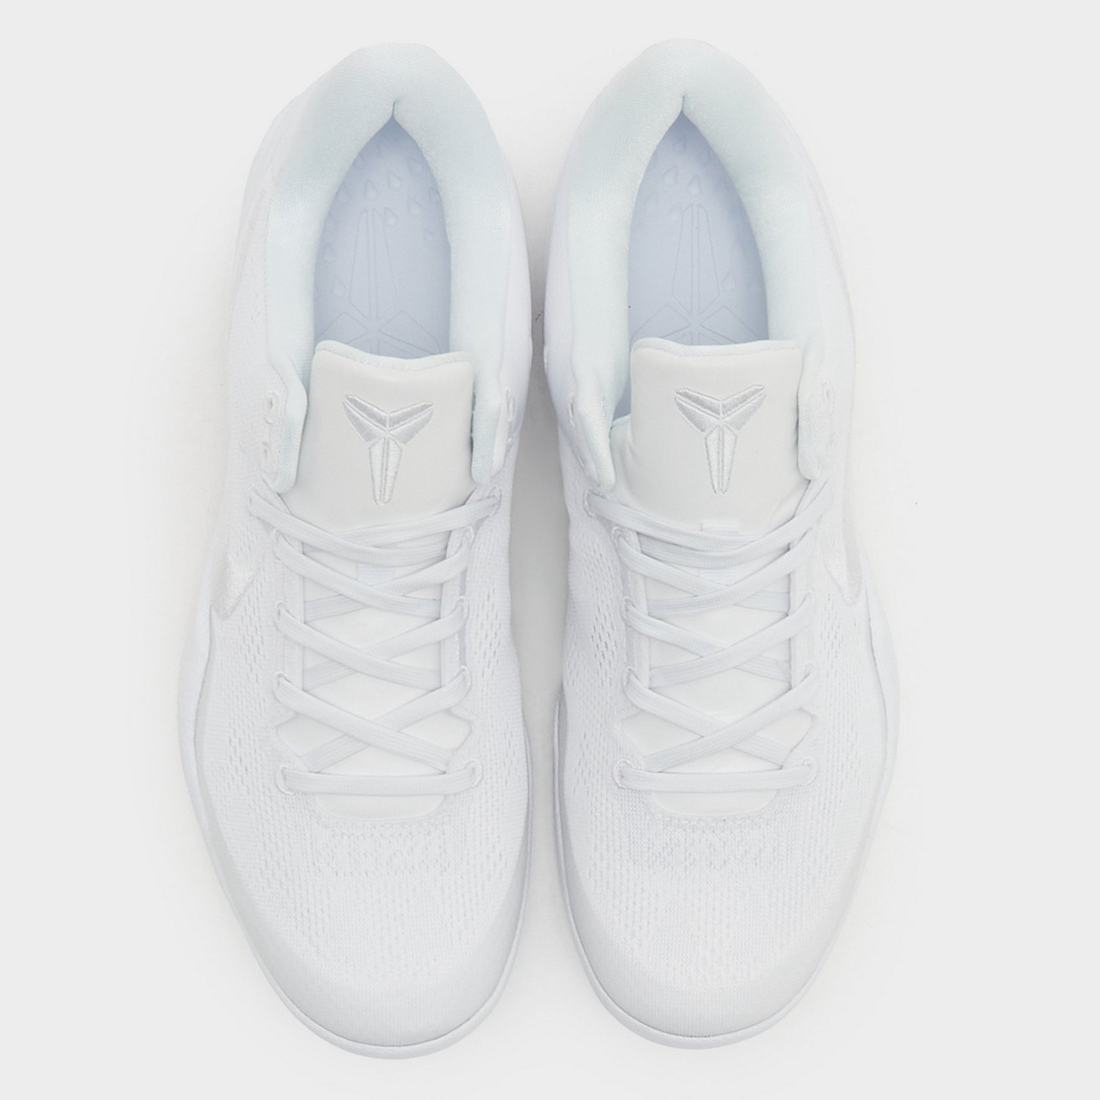 Nike-Kobe-8-Protro-Triple-White-2.jpg